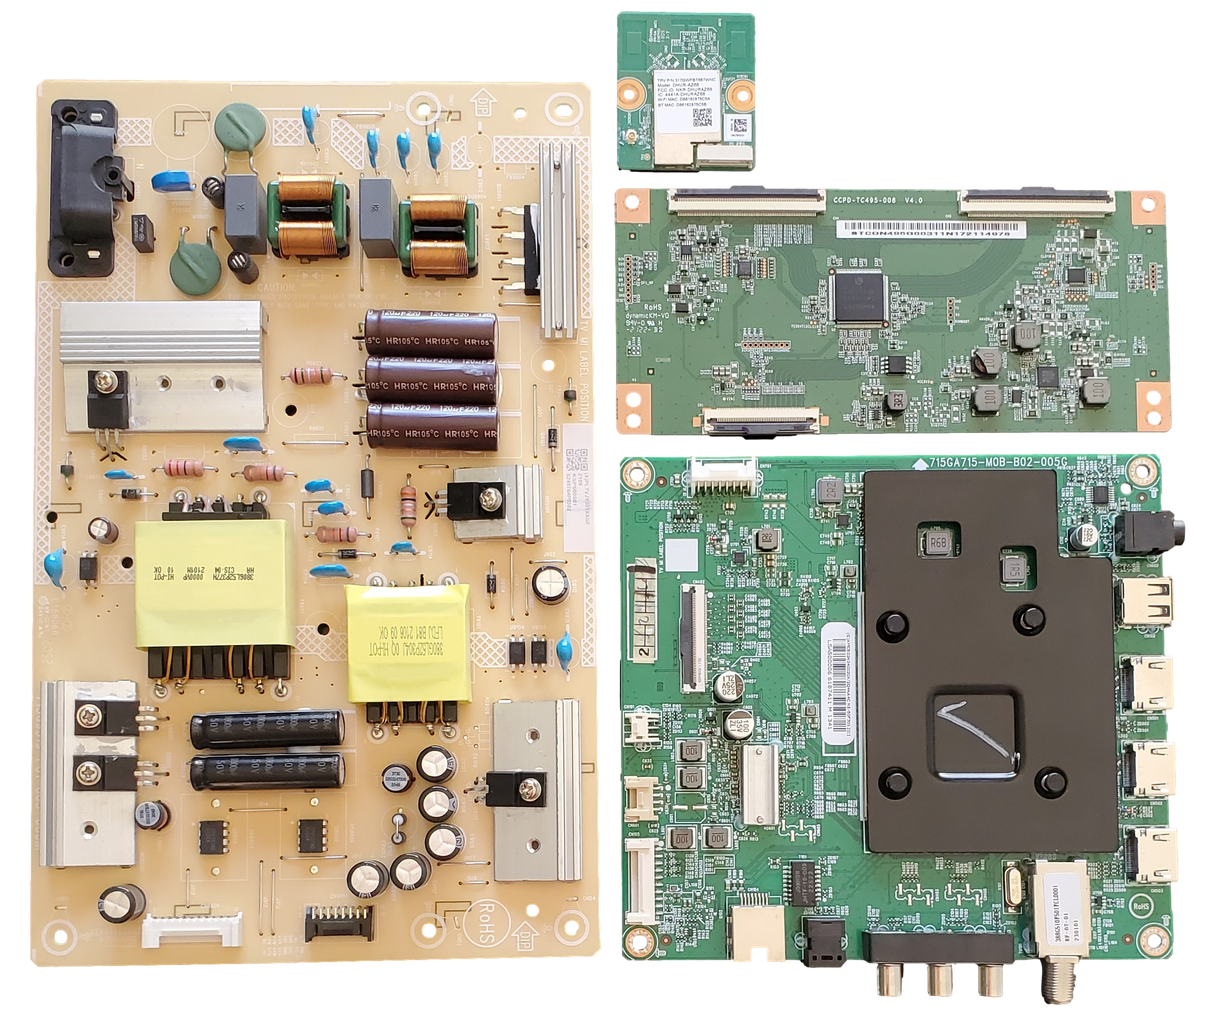 NS-50F301NA24 Insignia TV Repair Kit, 756TXMCB02K040 Main Board, PLTVJY301XXGF Power Supply, STCON495G T-CON, 317GWFBT667WNC Wi-Fi Board, NS-50F301NA24